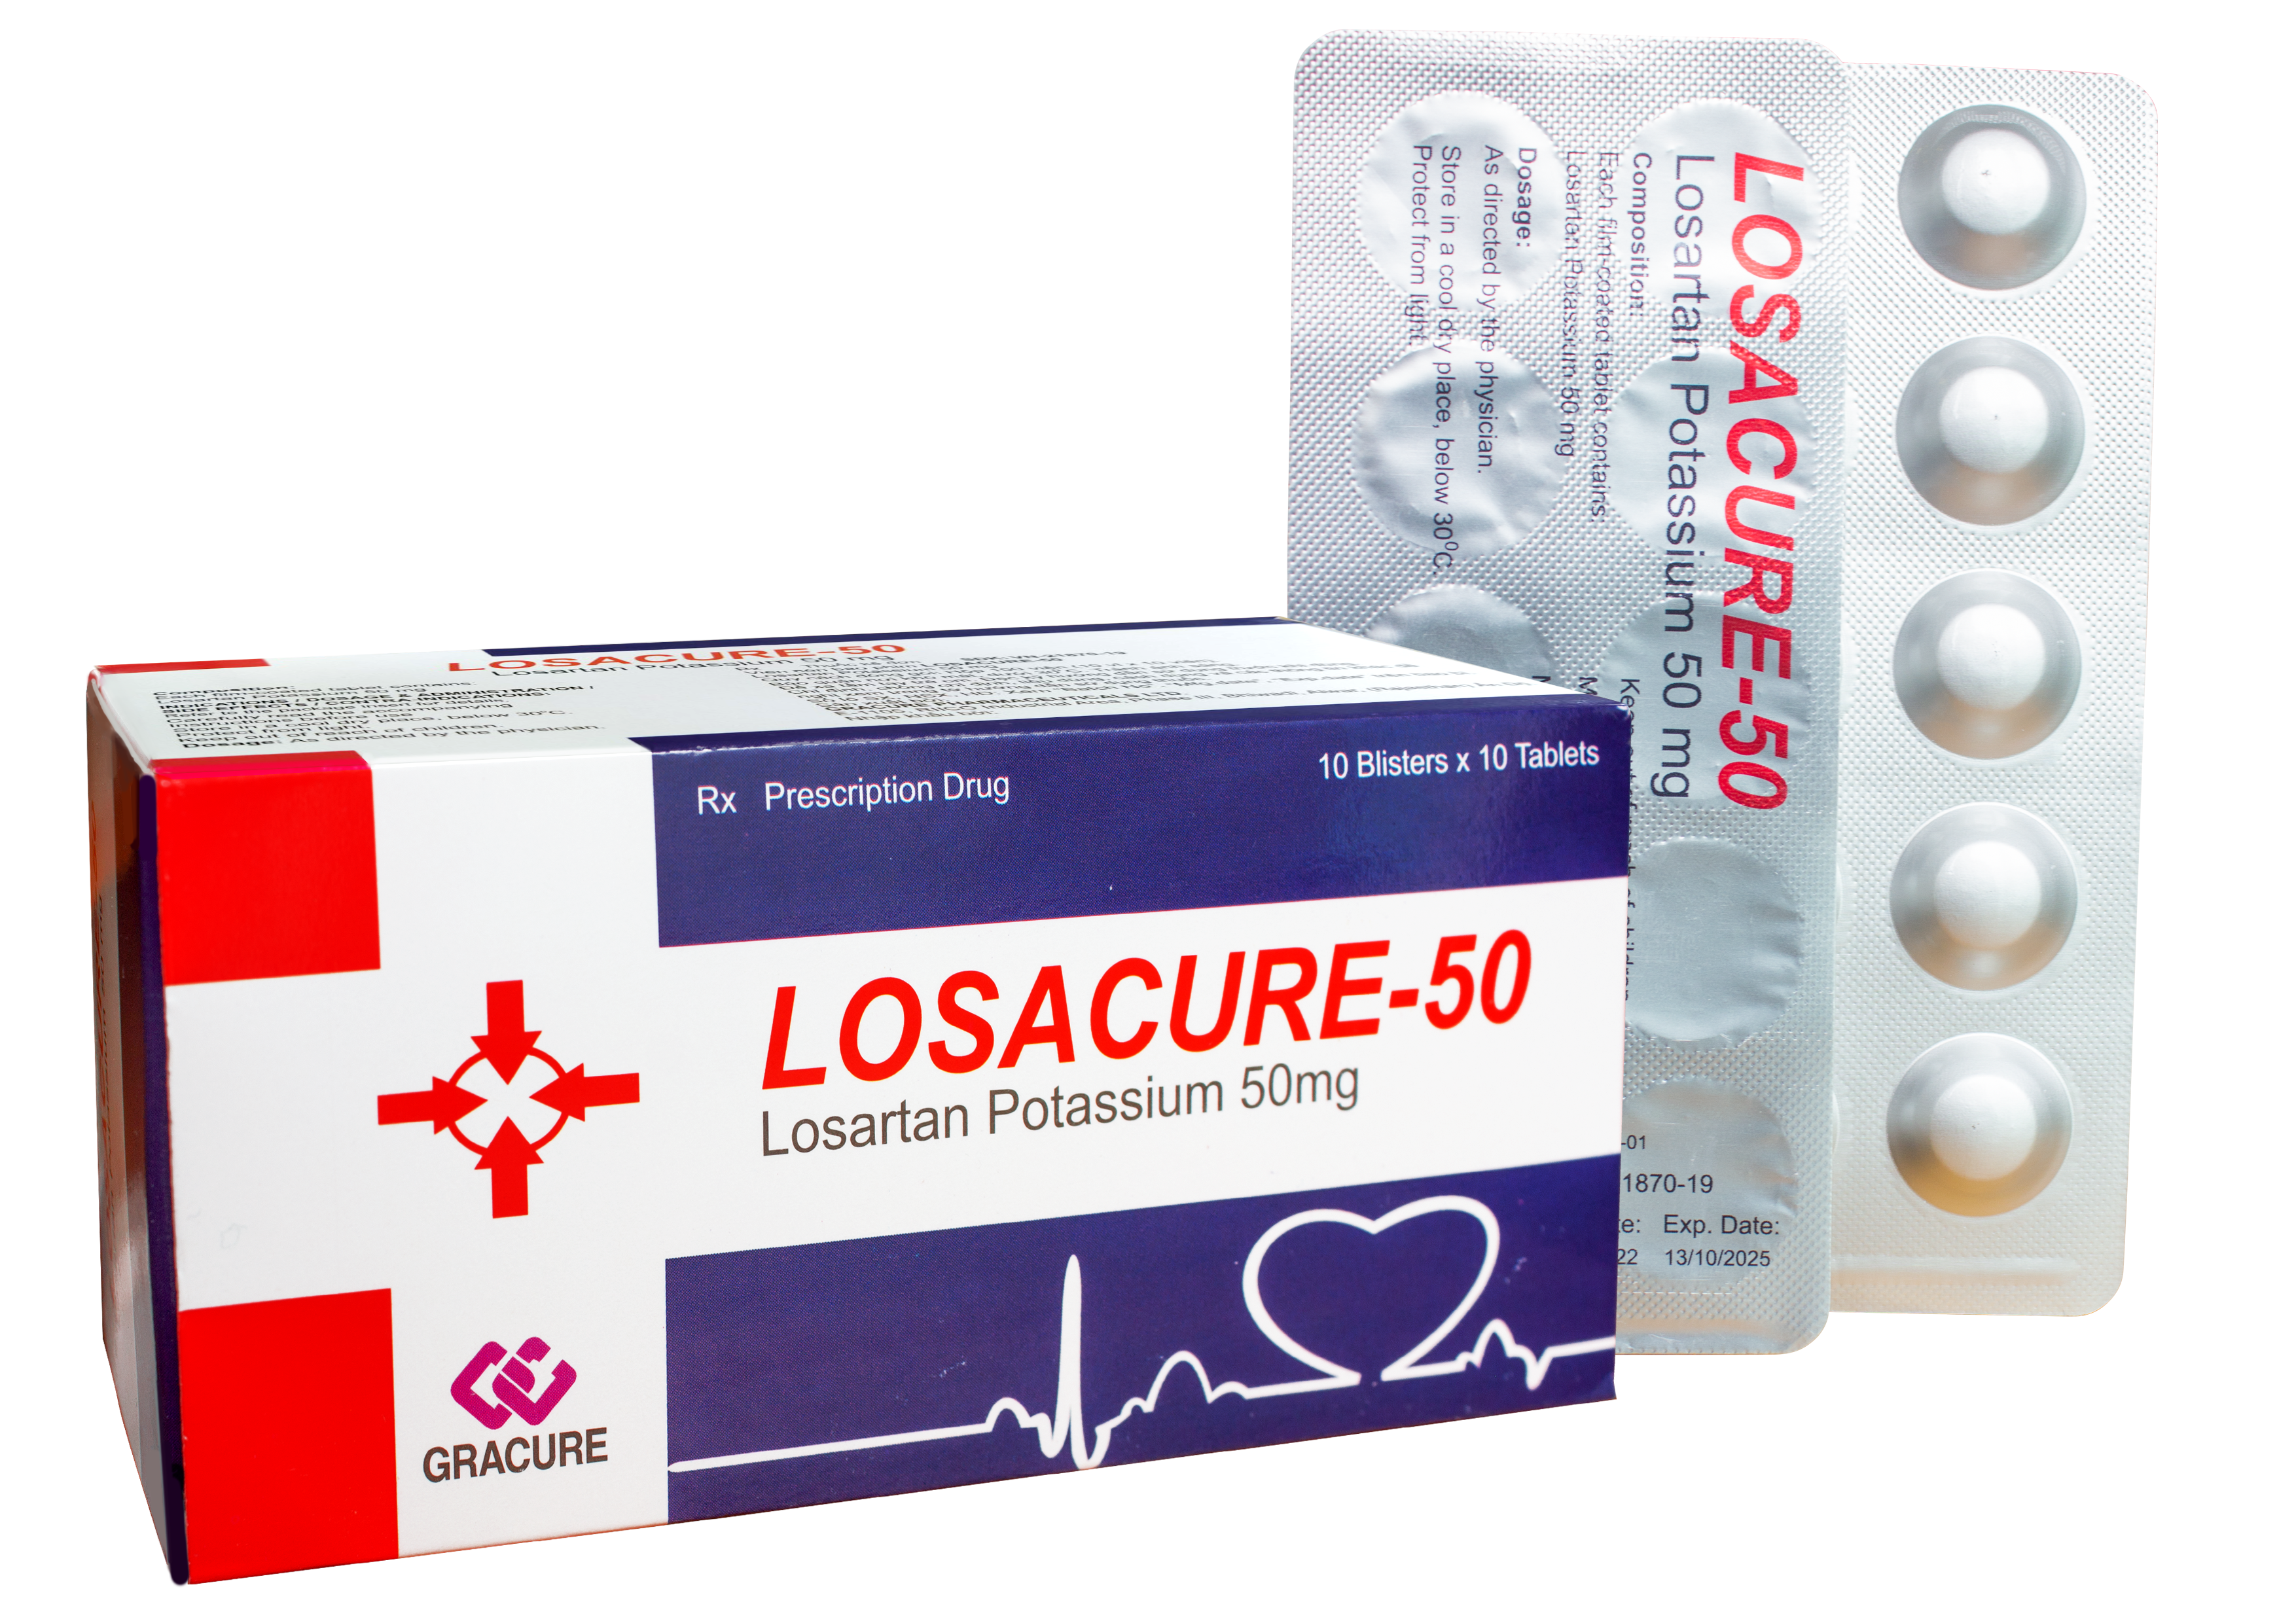 Losacure-50